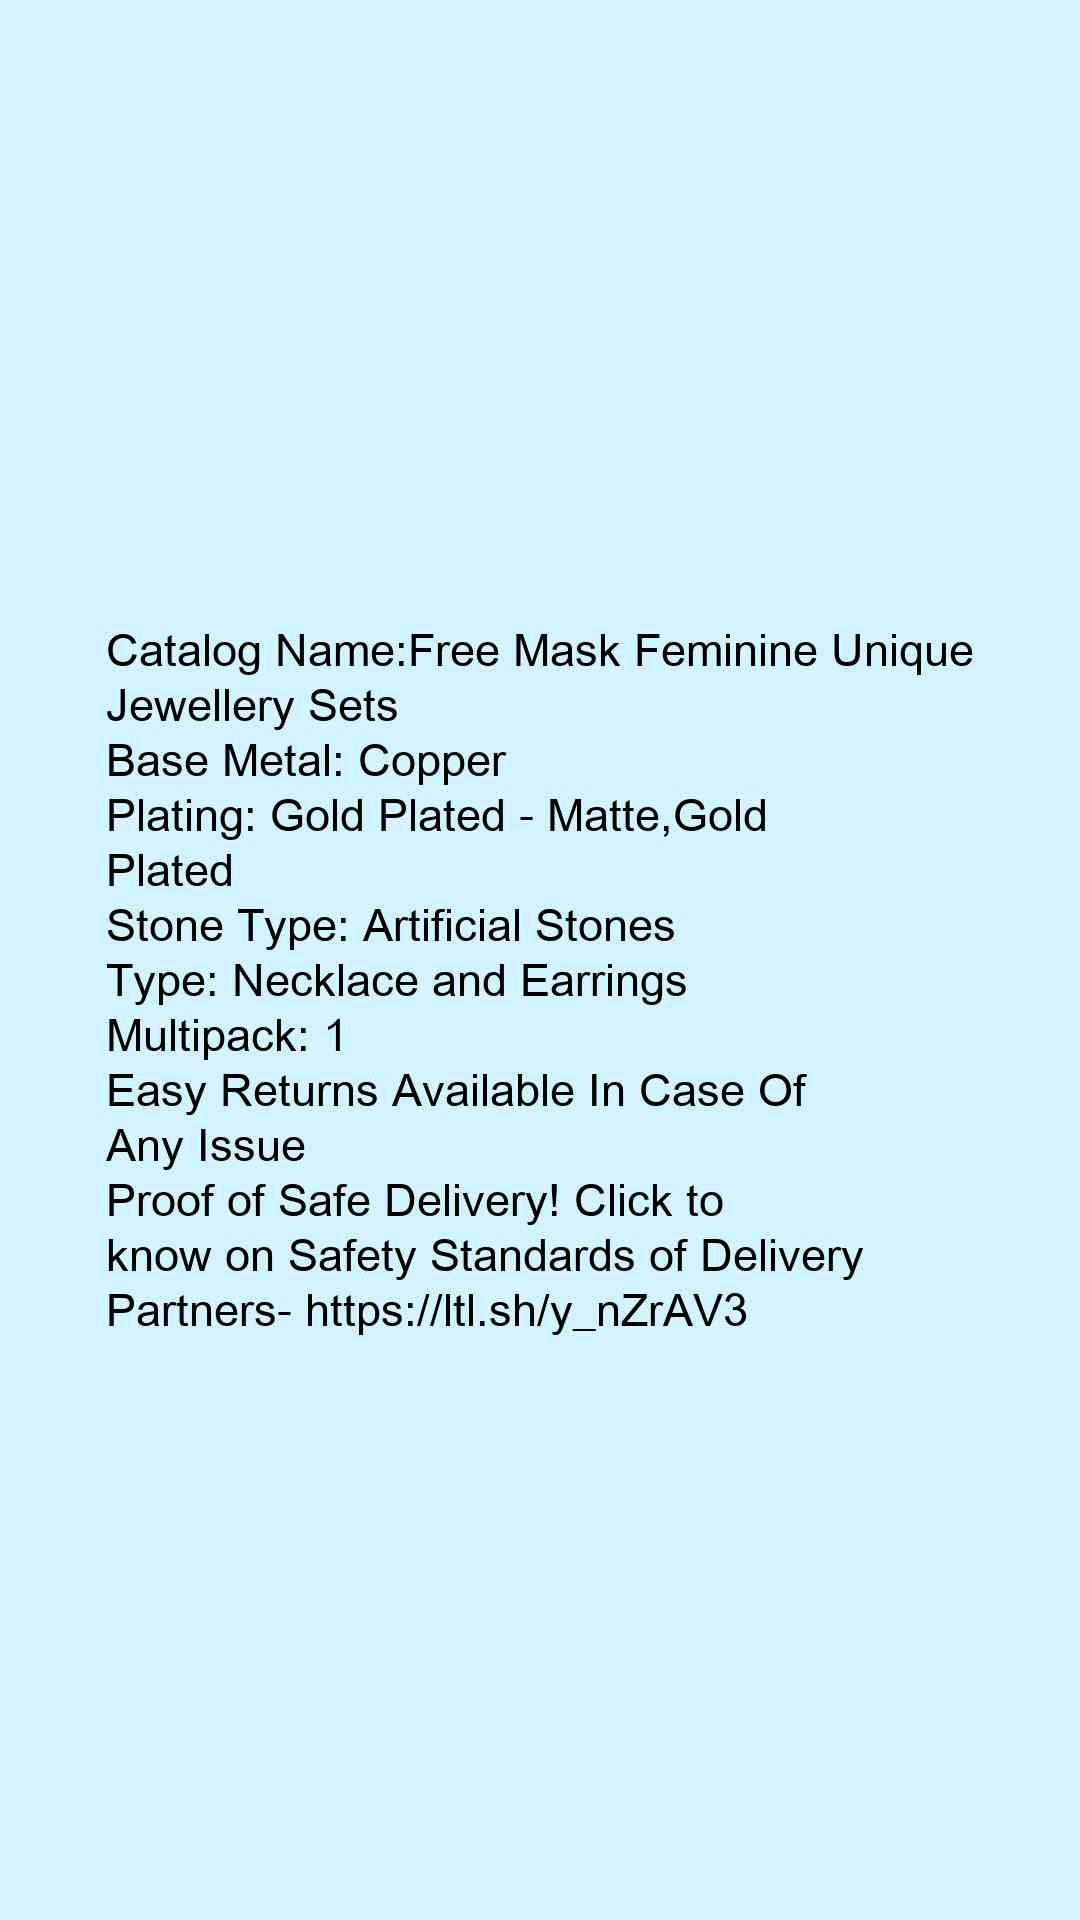 Free Mask Feminine Unique Jewellery Sets - Faritha